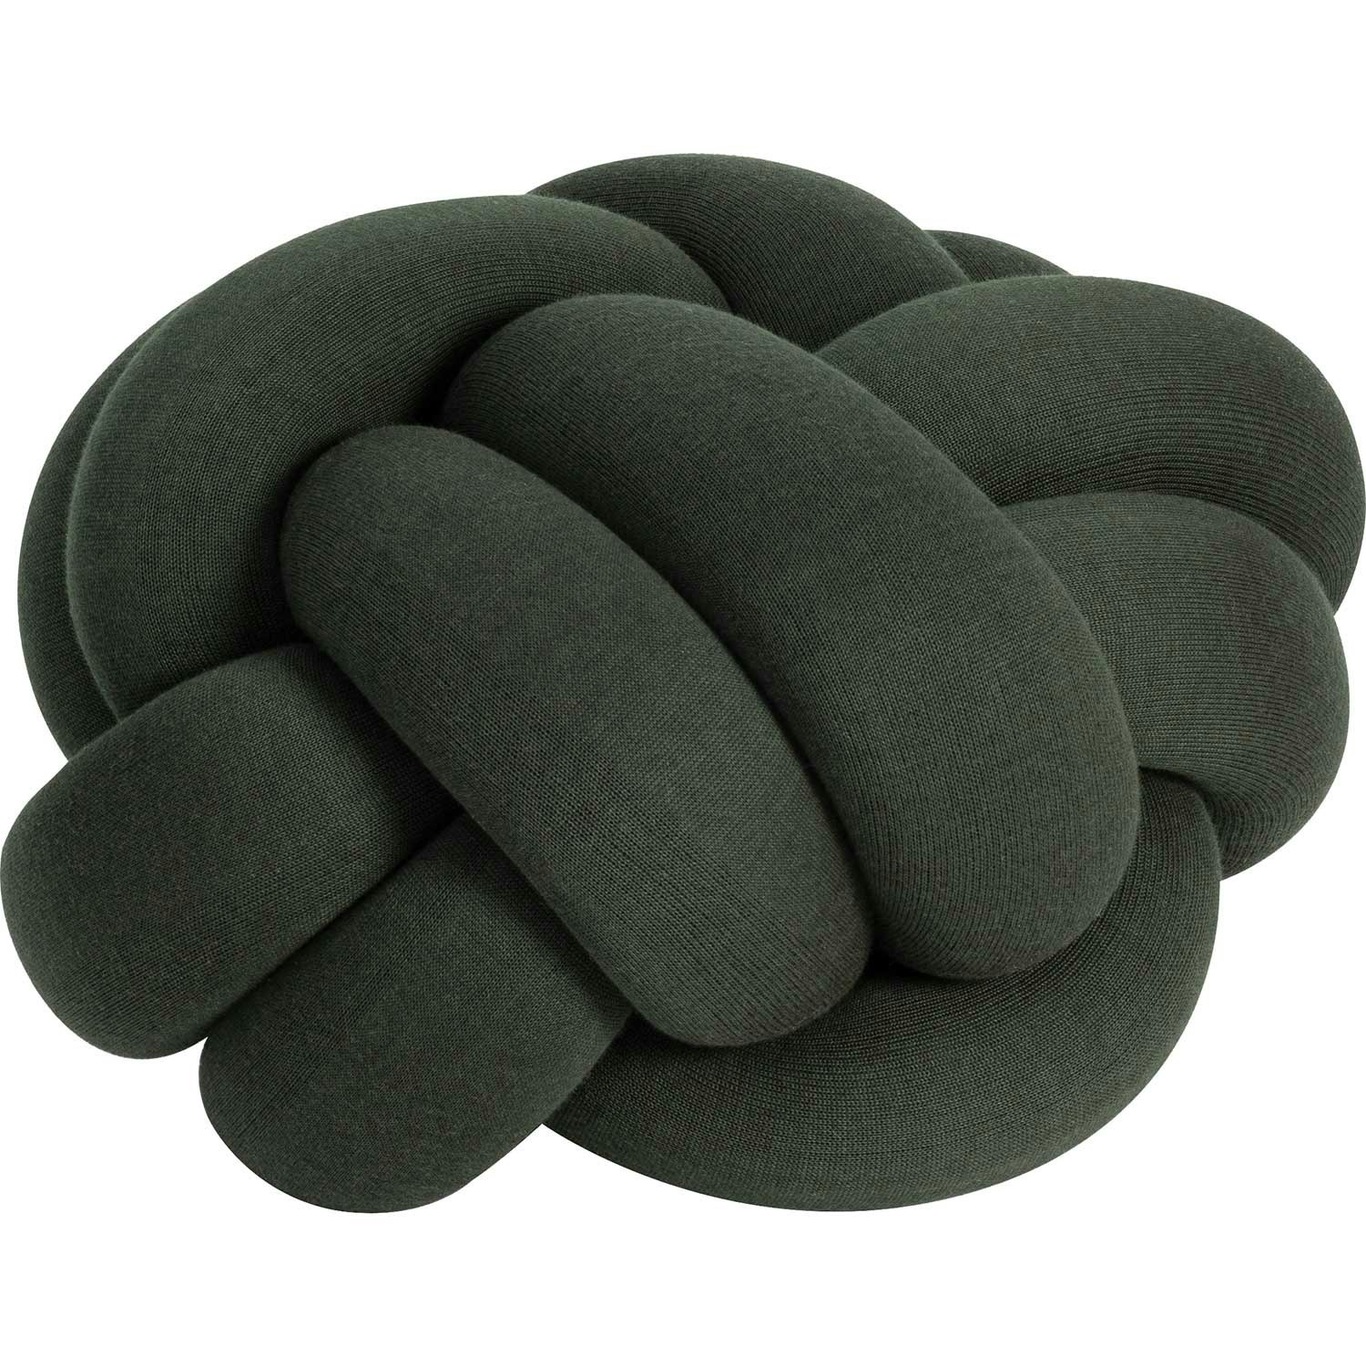 Knot Cushion Medium, Forest Green